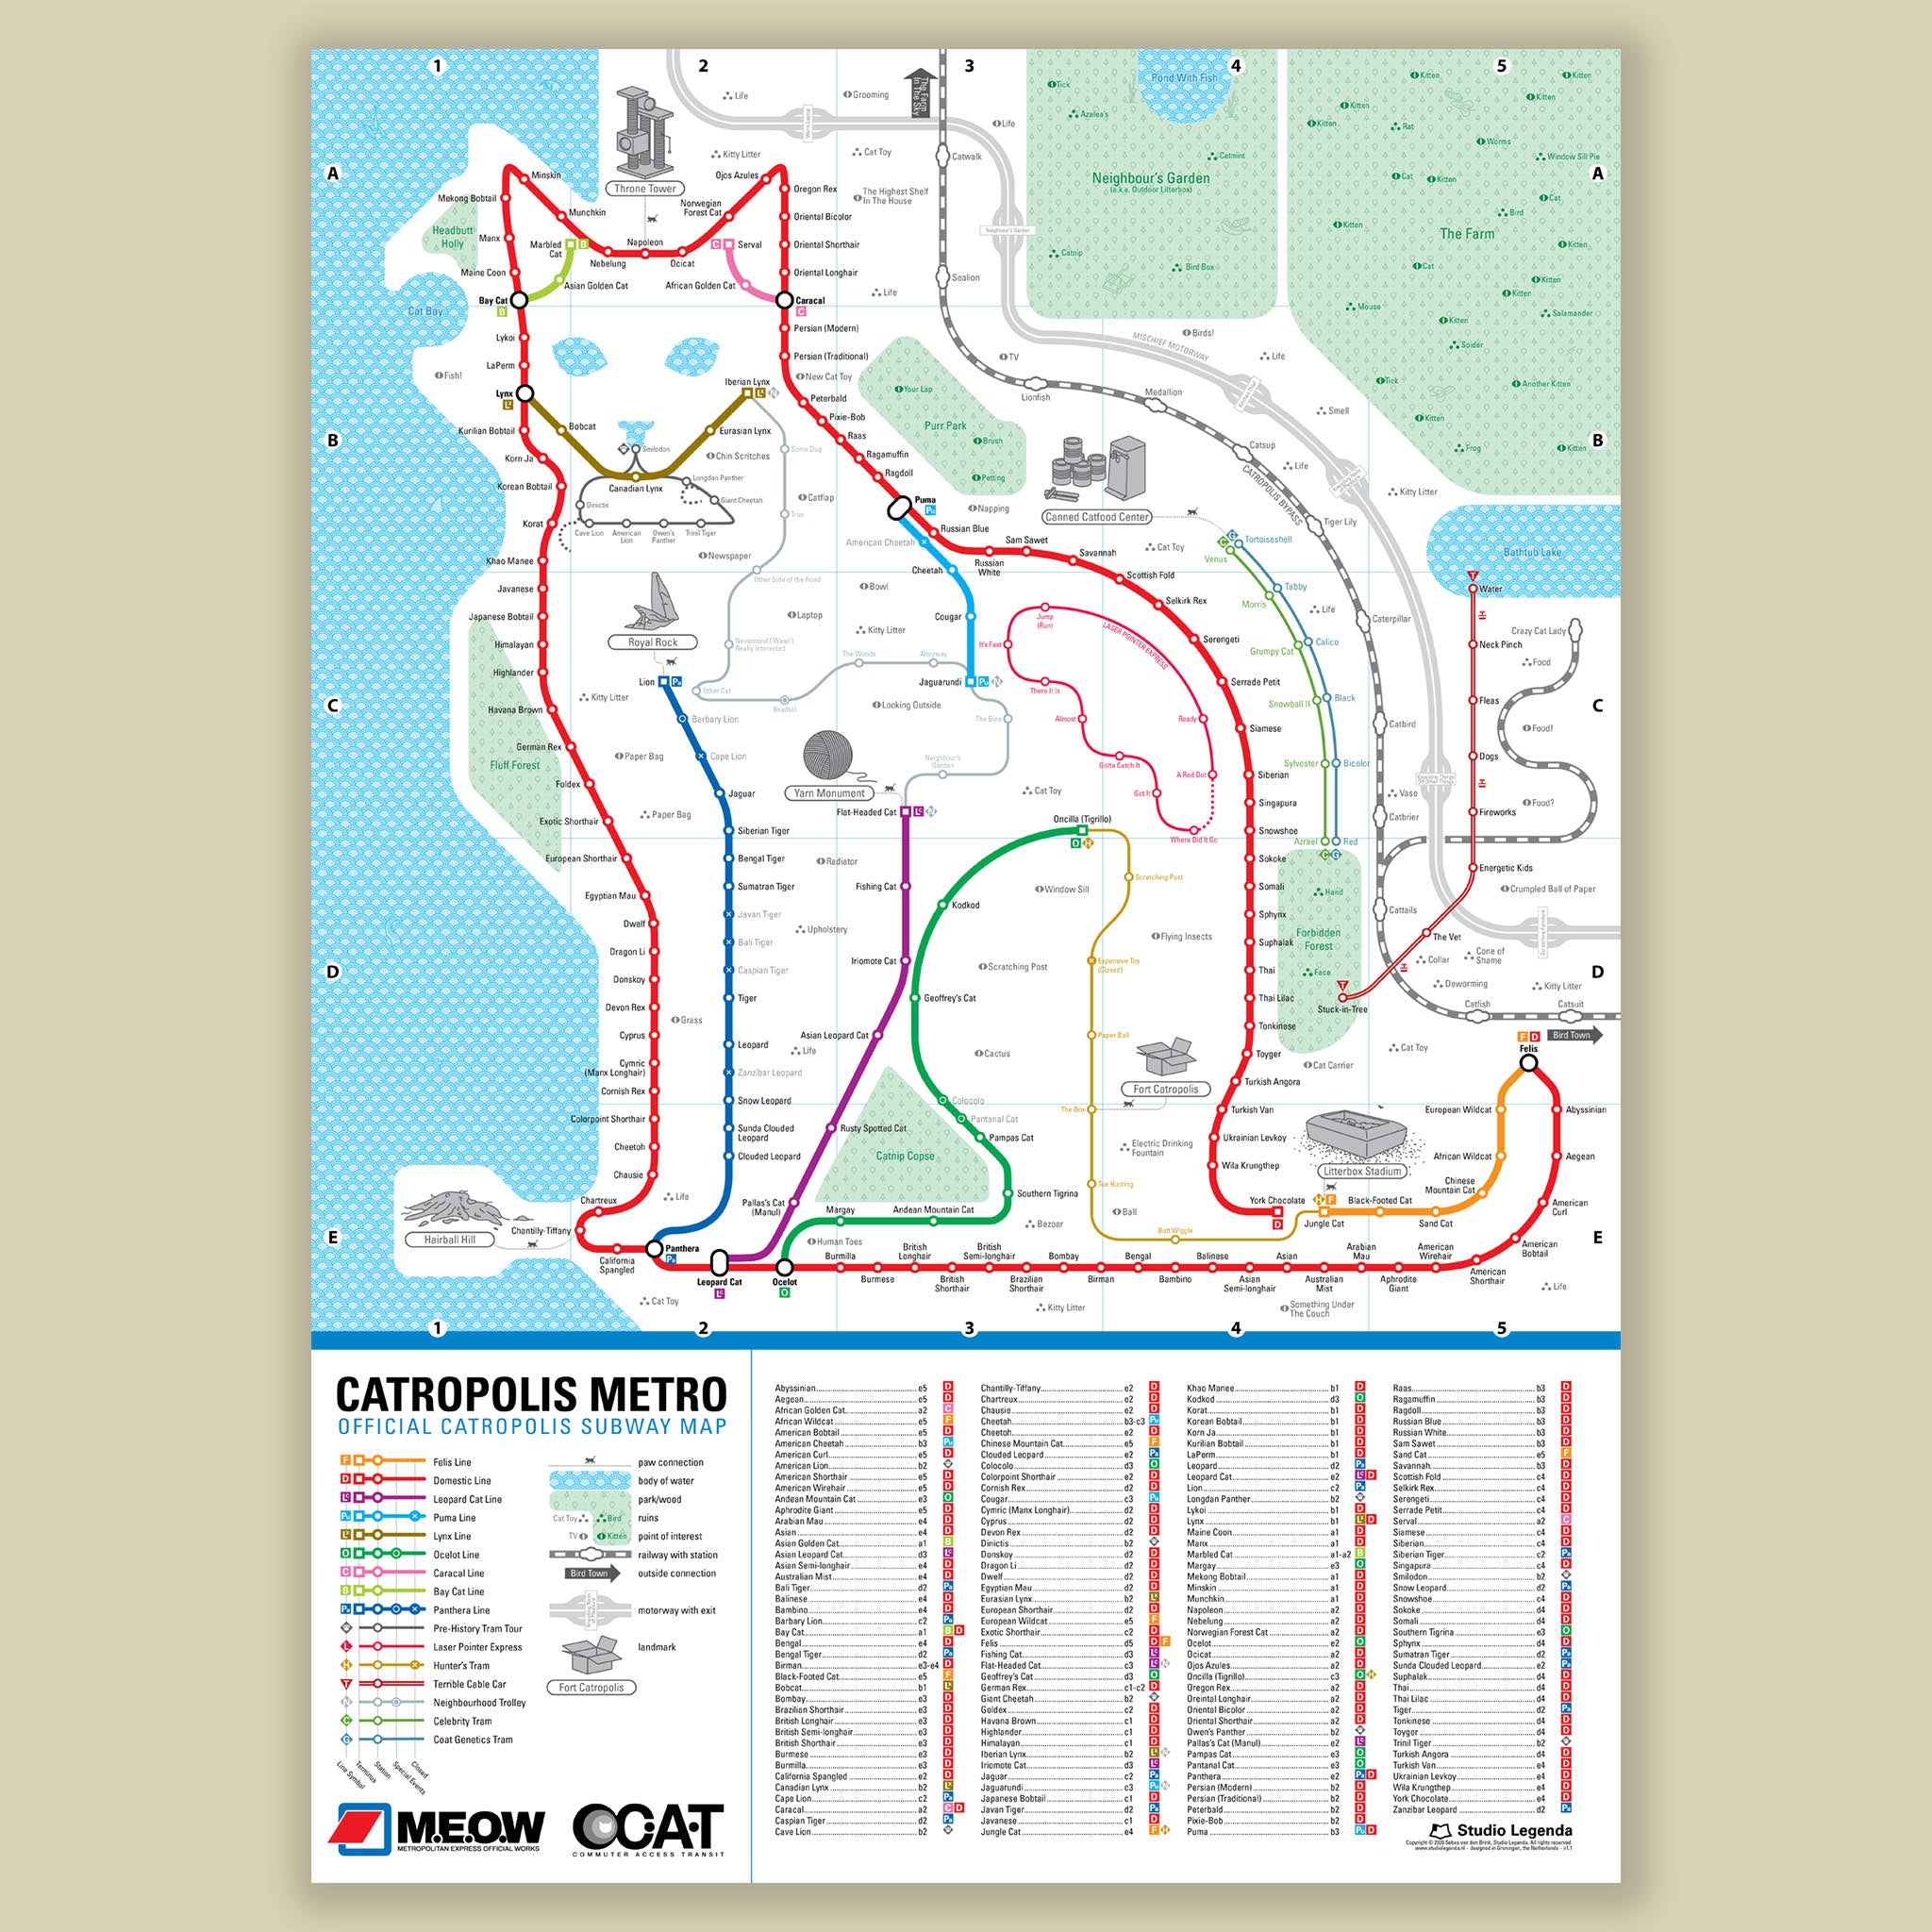 Catropolis Metro subway map